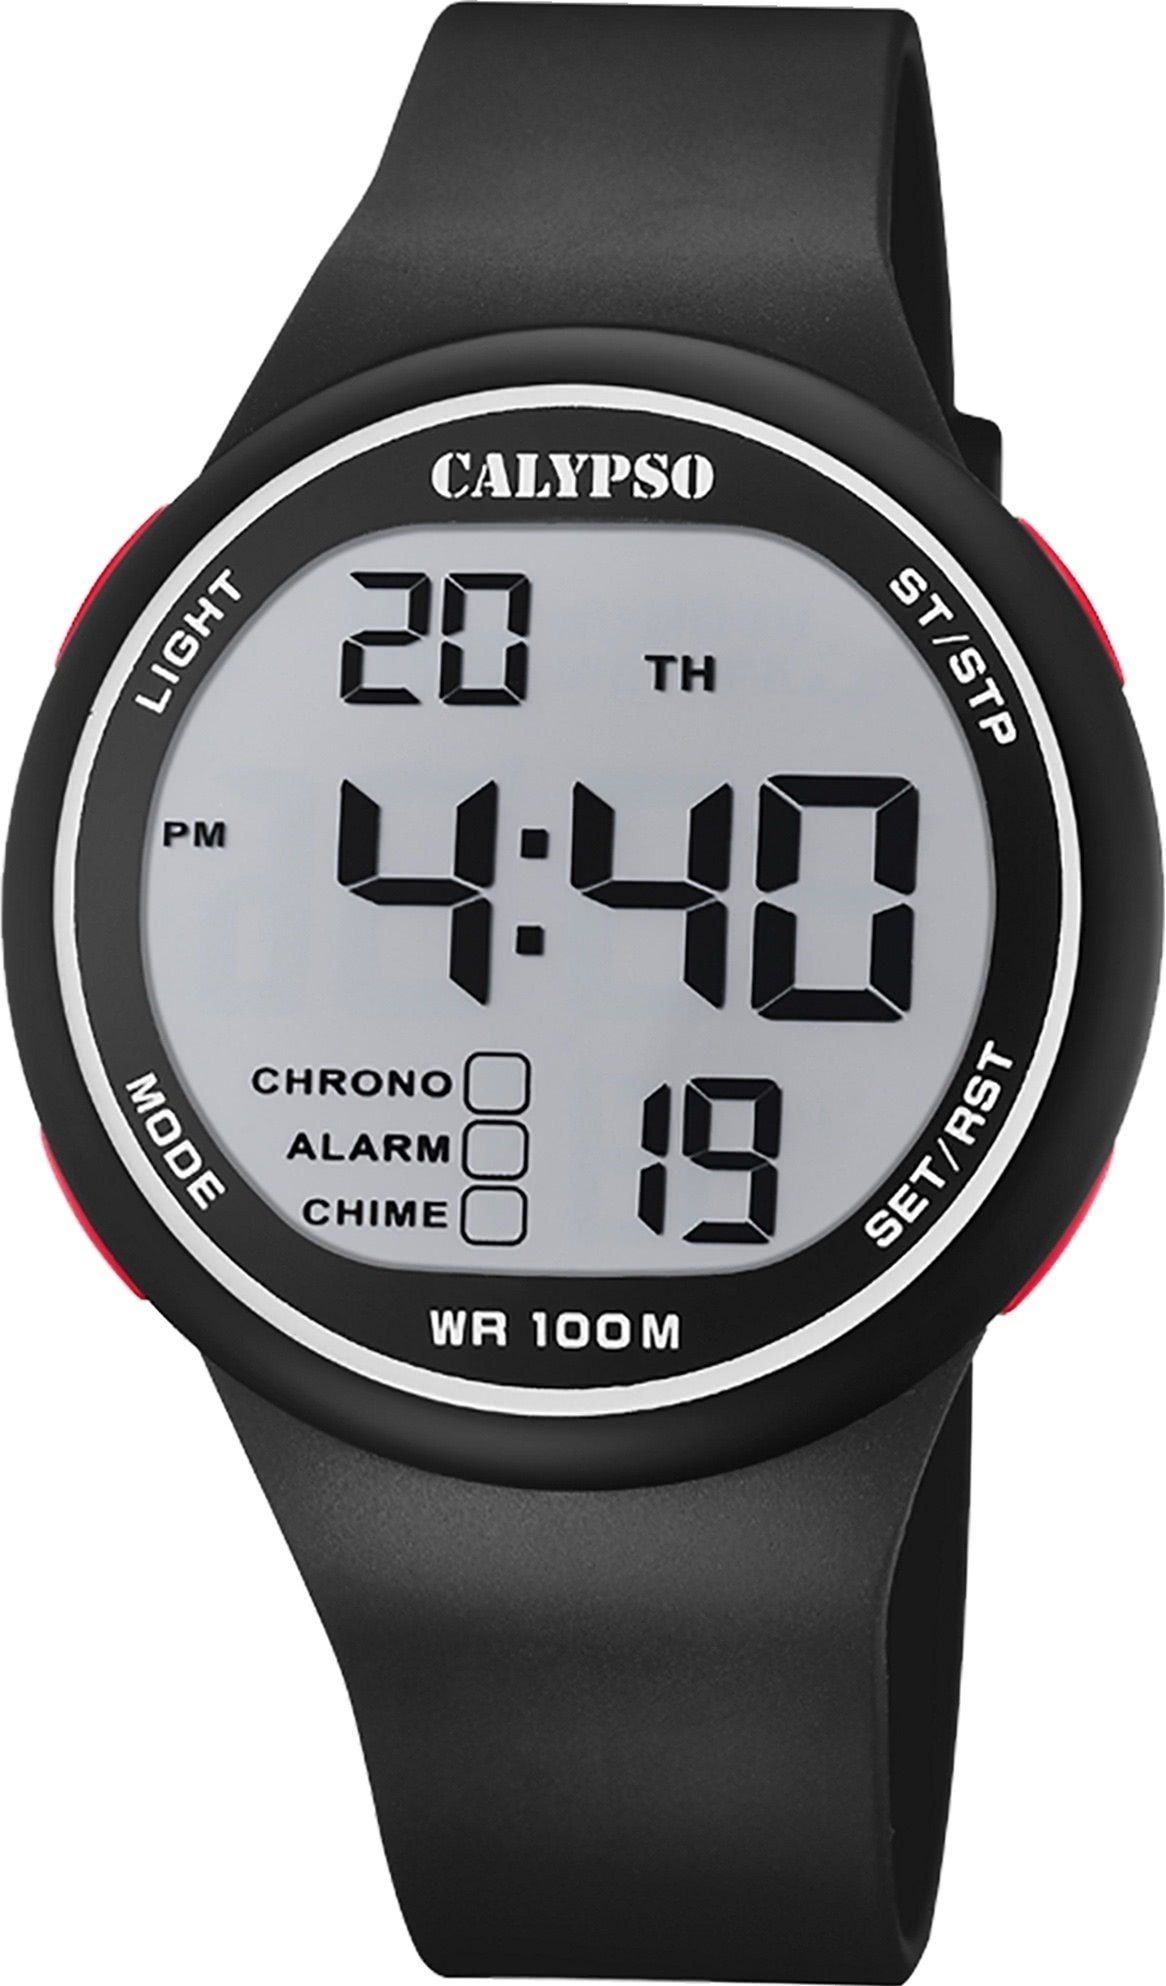 CALYPSO WATCHES Digitaluhr »UK5795/1 Calypso Herren Uhr Digital Sport«, ( Digitaluhr), Herren Armbanduhr rund, Kunststoffarmband schwarz, Sport  online kaufen | OTTO